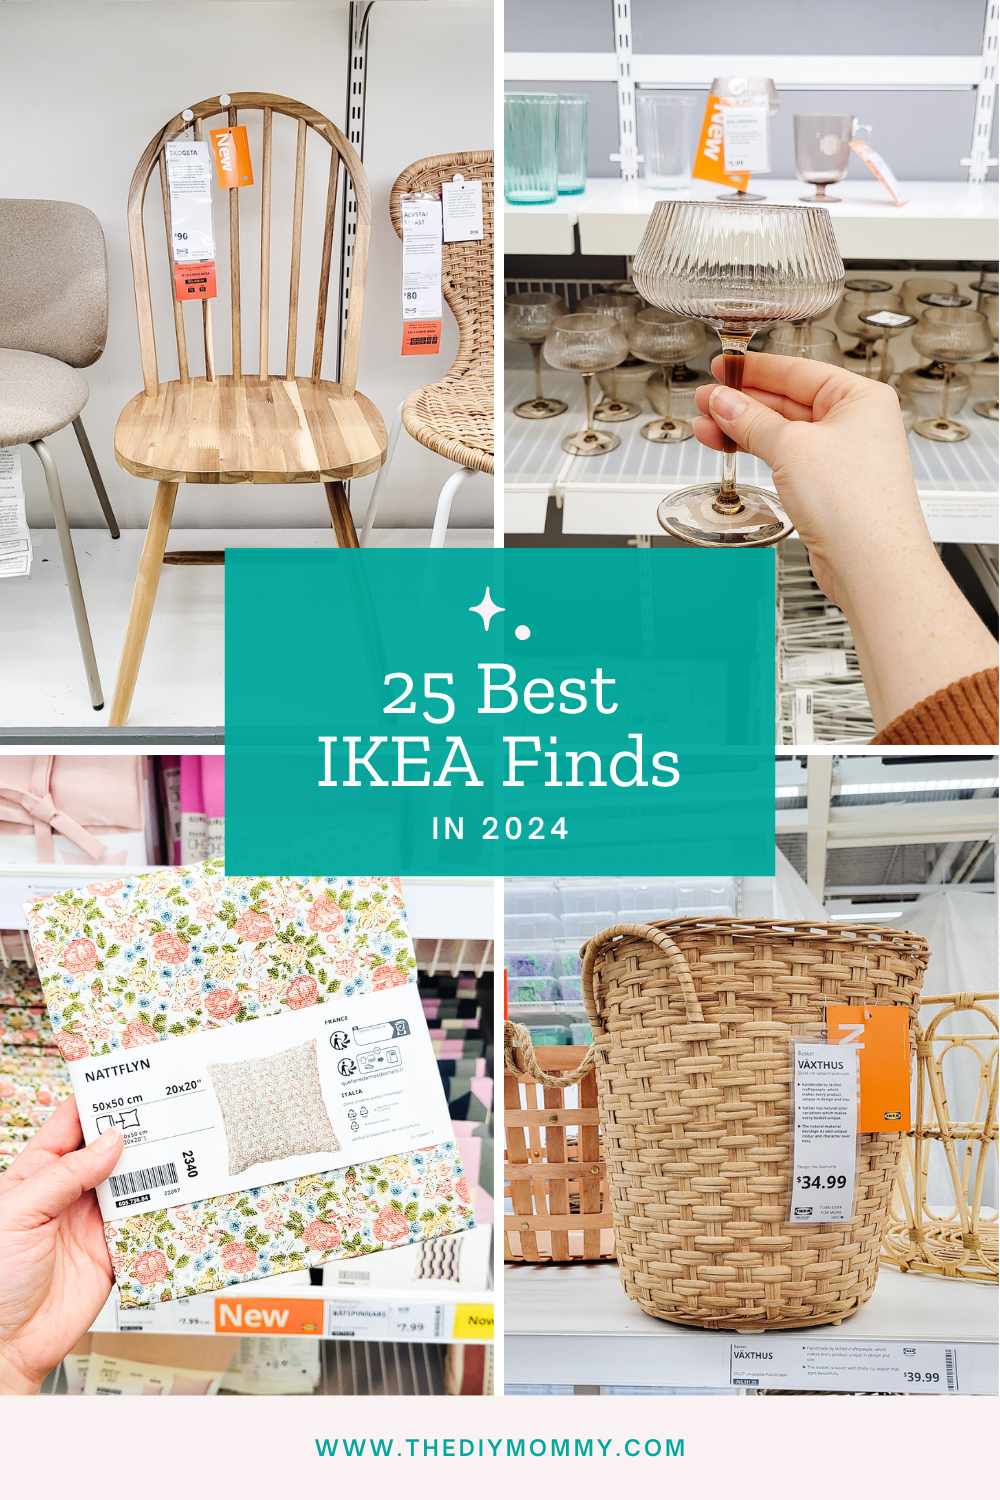 25 Best IKEA Finds in 2024